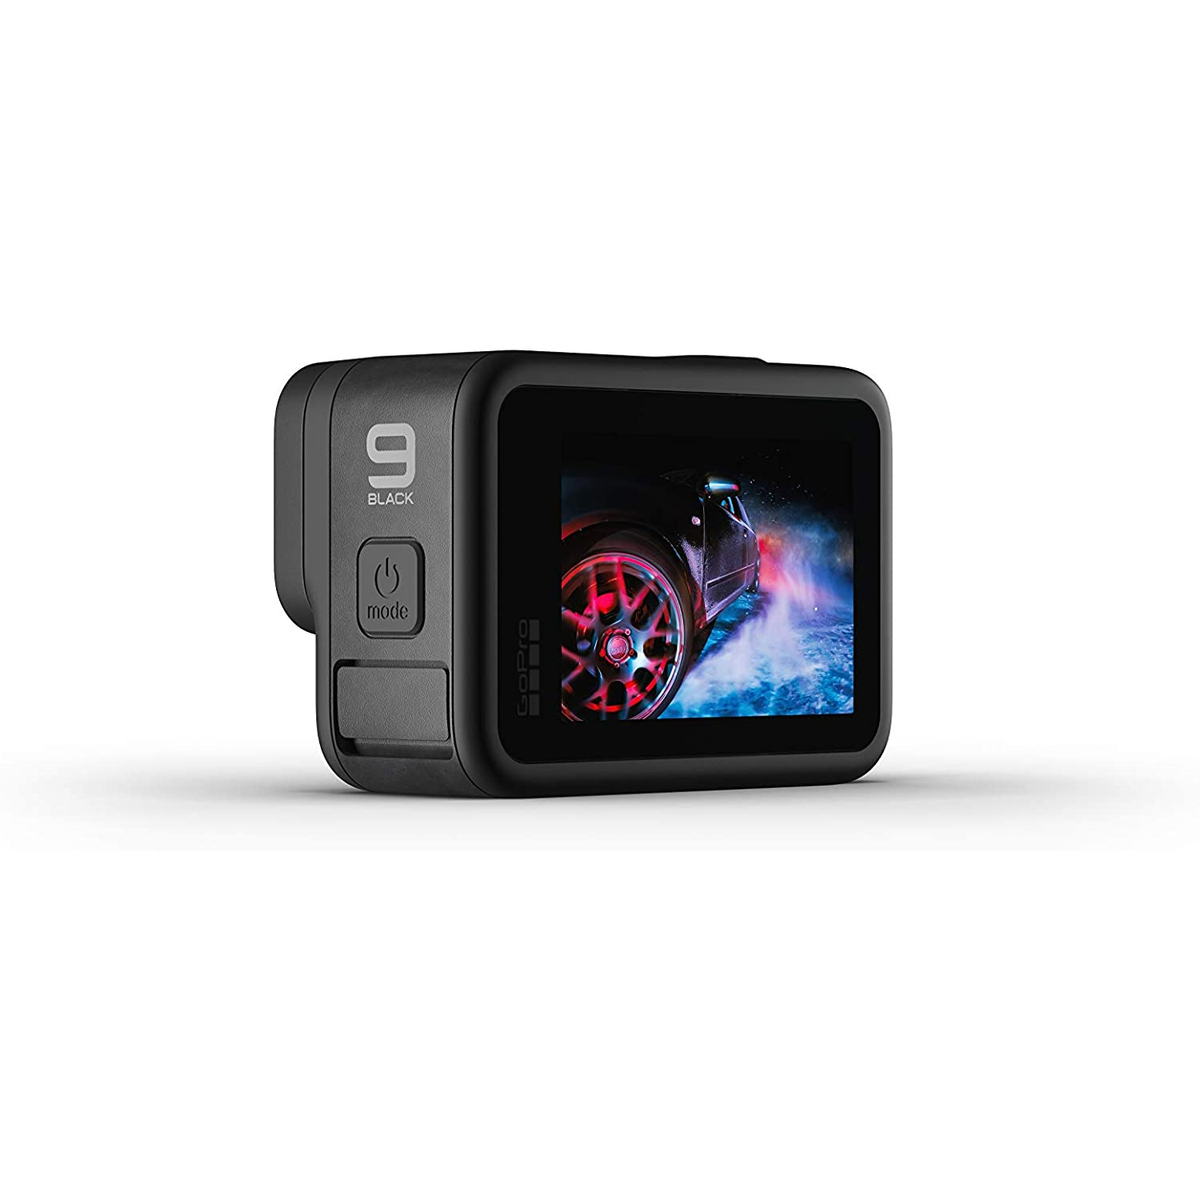 GOPRO HERO 9 inkl. Fernbedienung, WLAN, BLACK HARD ACCESSORY Action BUNDLE Touchscreen Cam